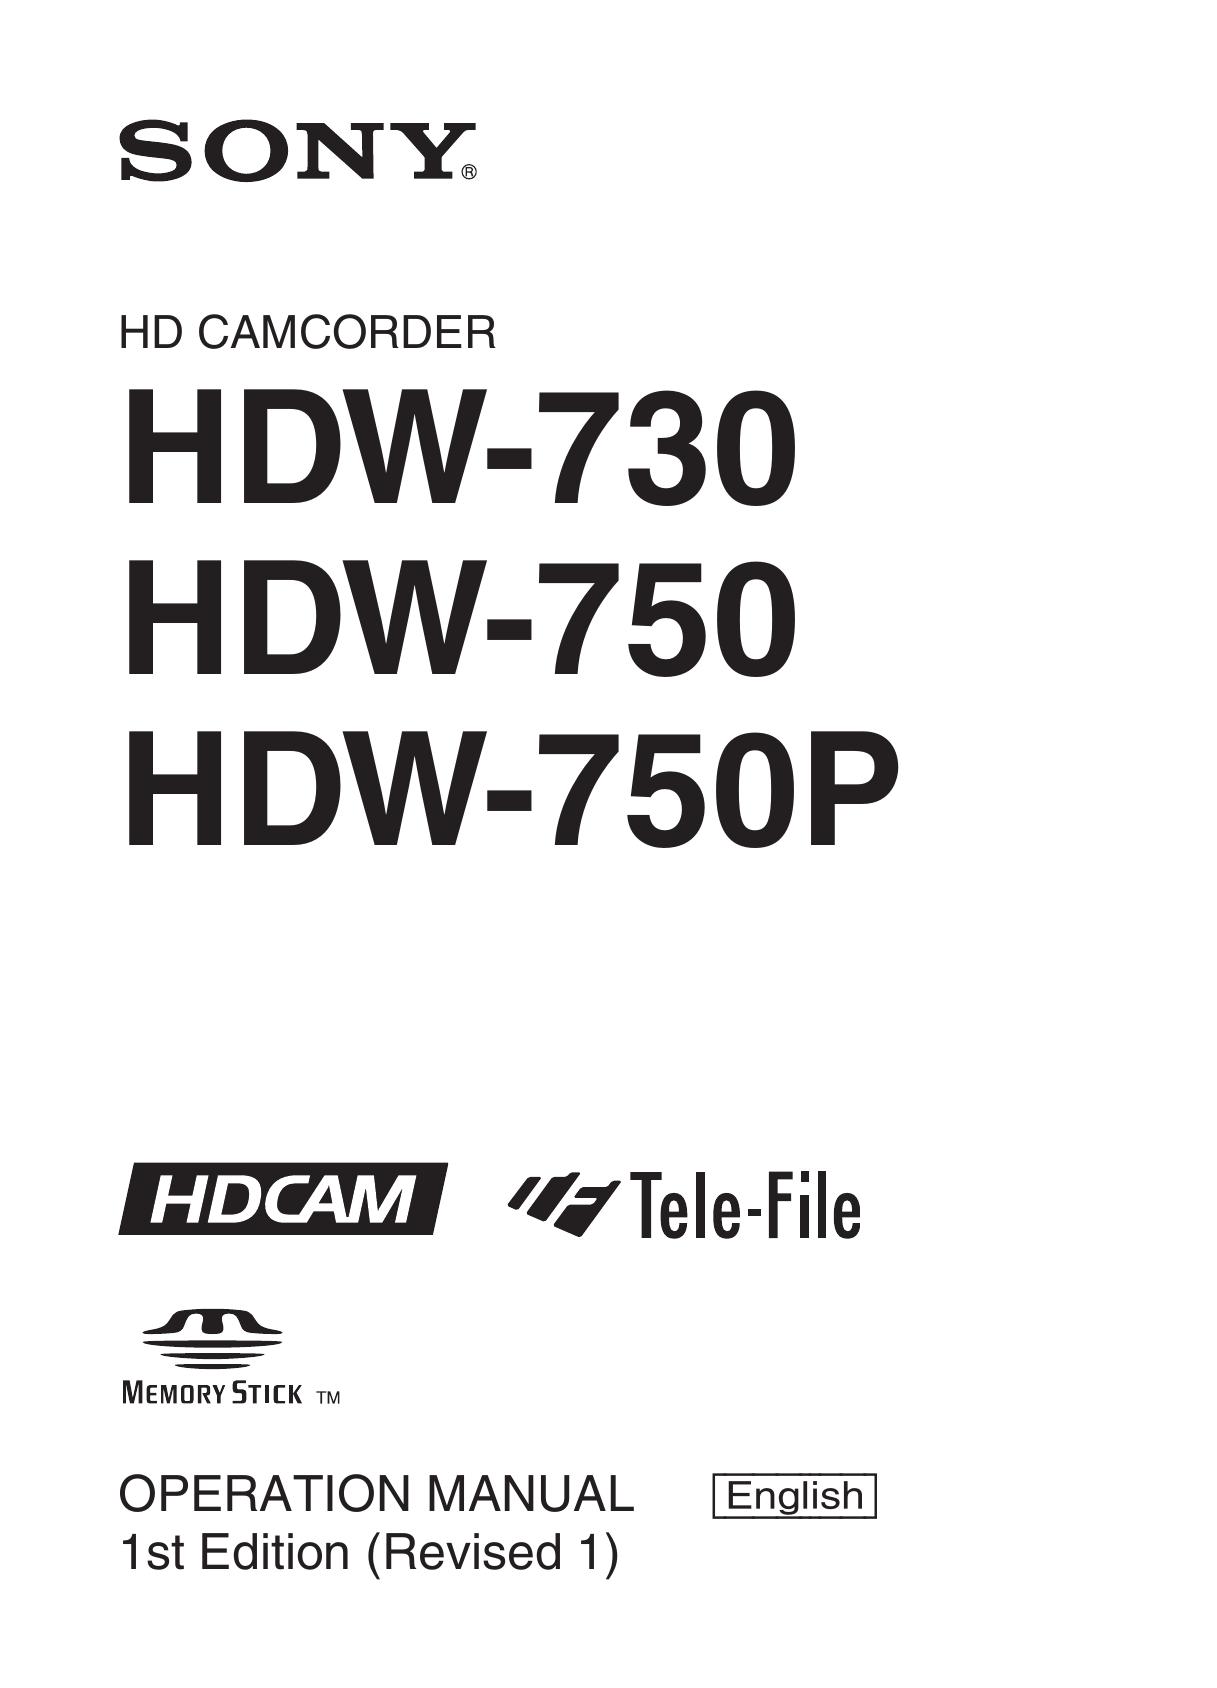 Yamaha HDW-730 Camcorder User Manual